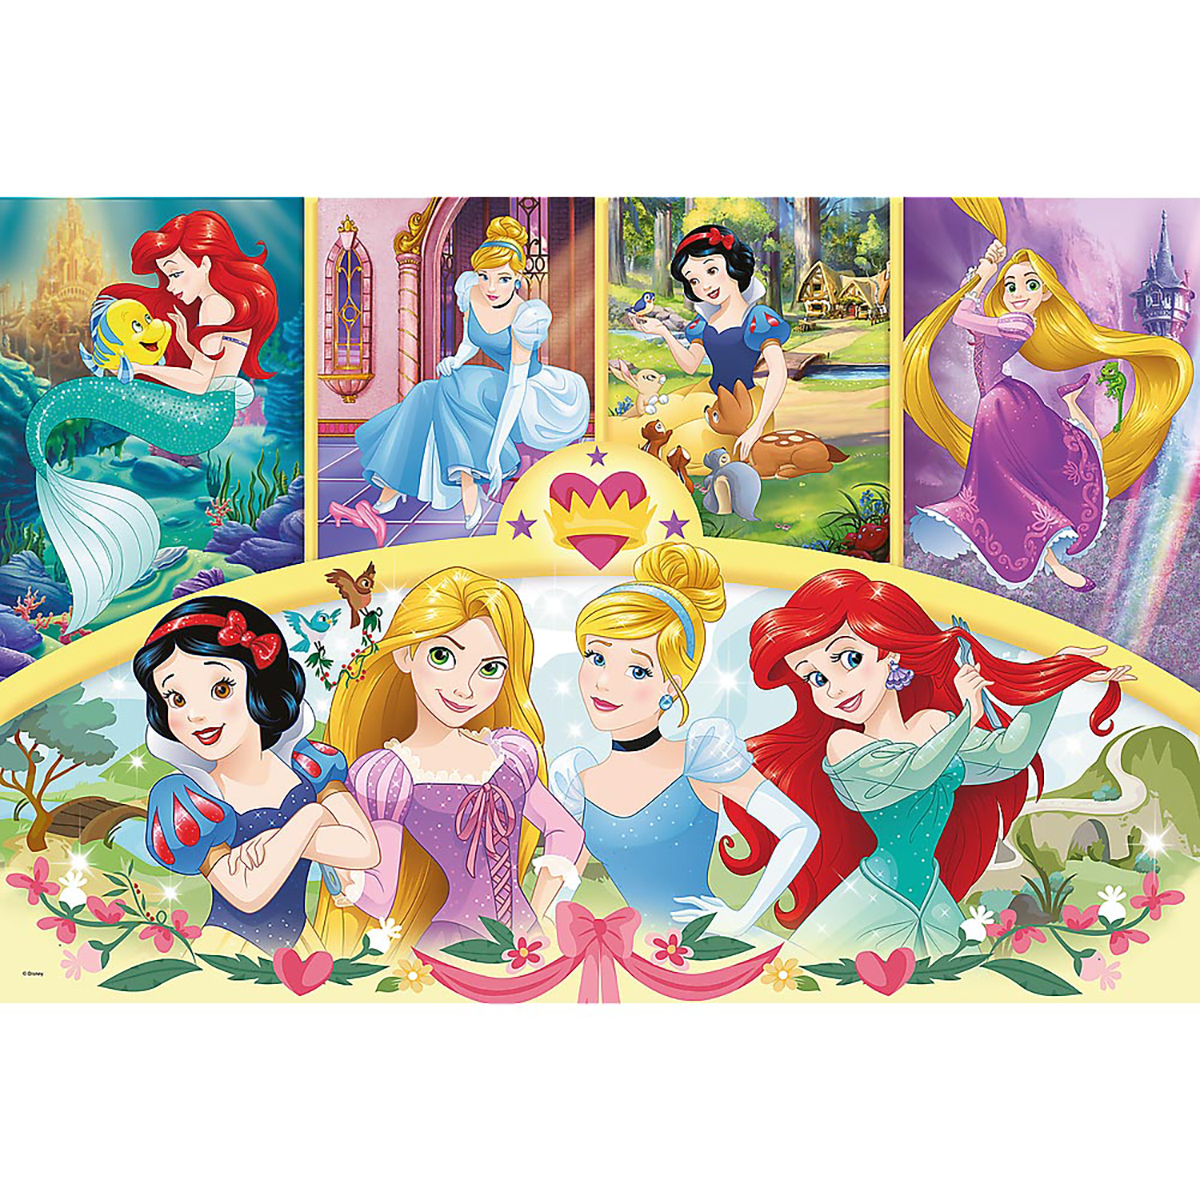 Disney Maxi TREFL Prinzessin 24T Pz. Puzzle